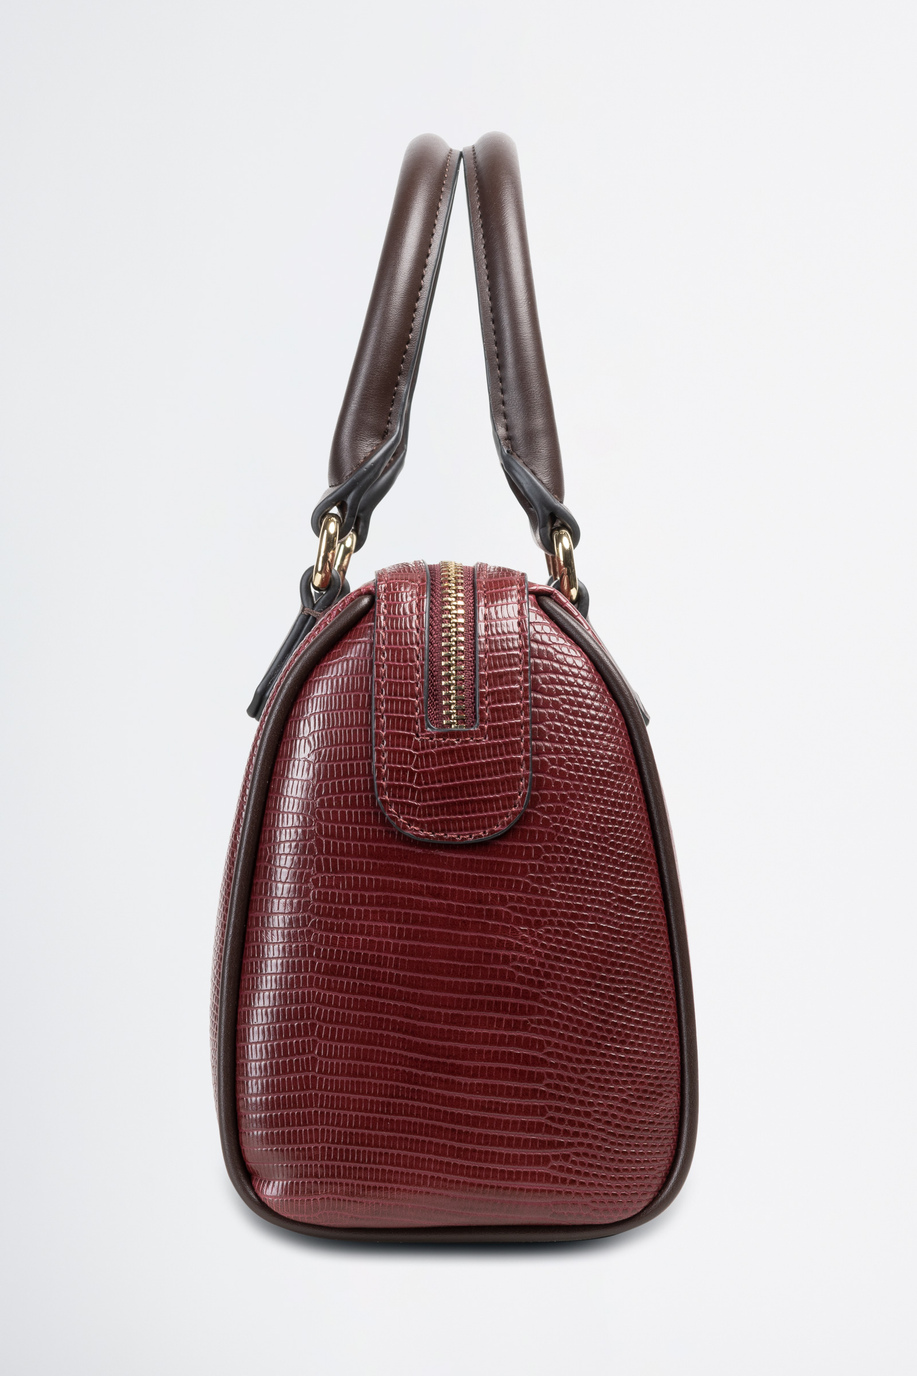 Double handle case in croco print - Woman leather goods | La Martina - Official Online Shop